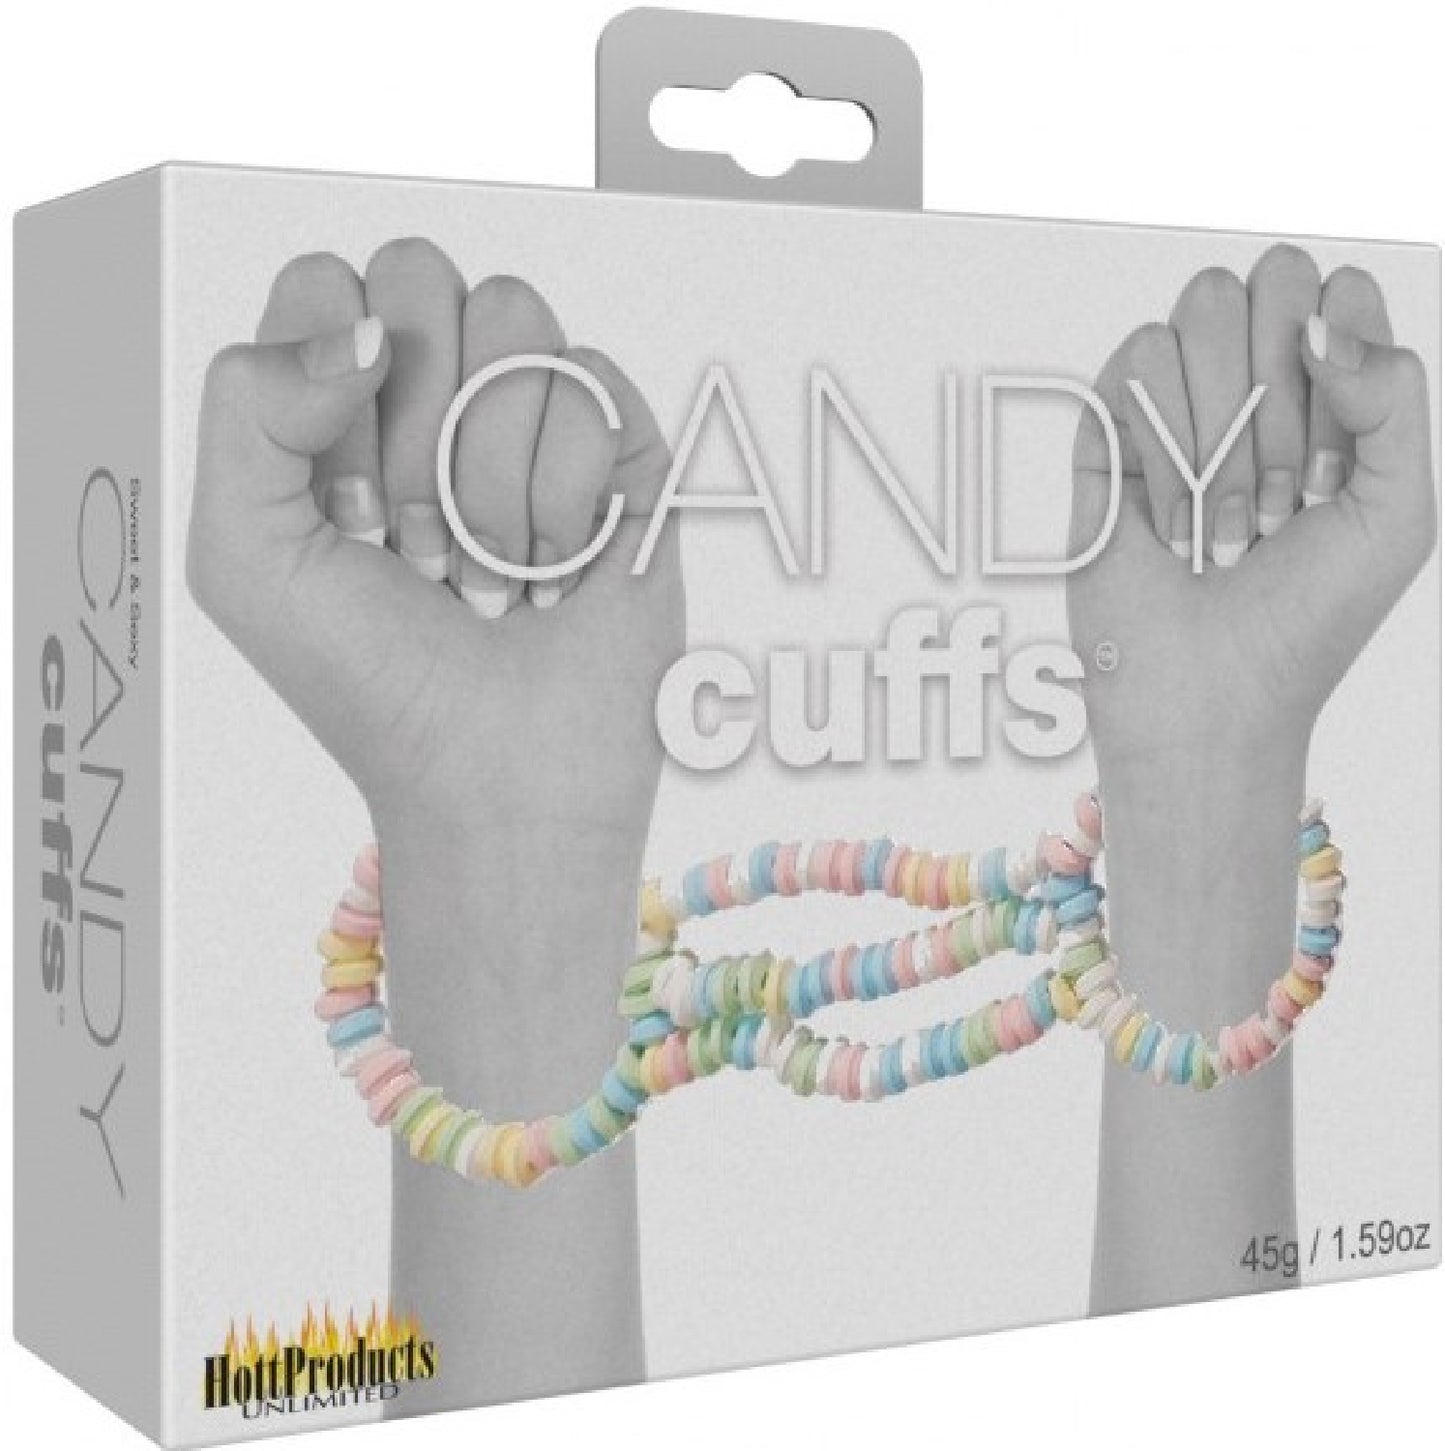 Sweet & Sexy Candy Cuffs Default Title - Club X